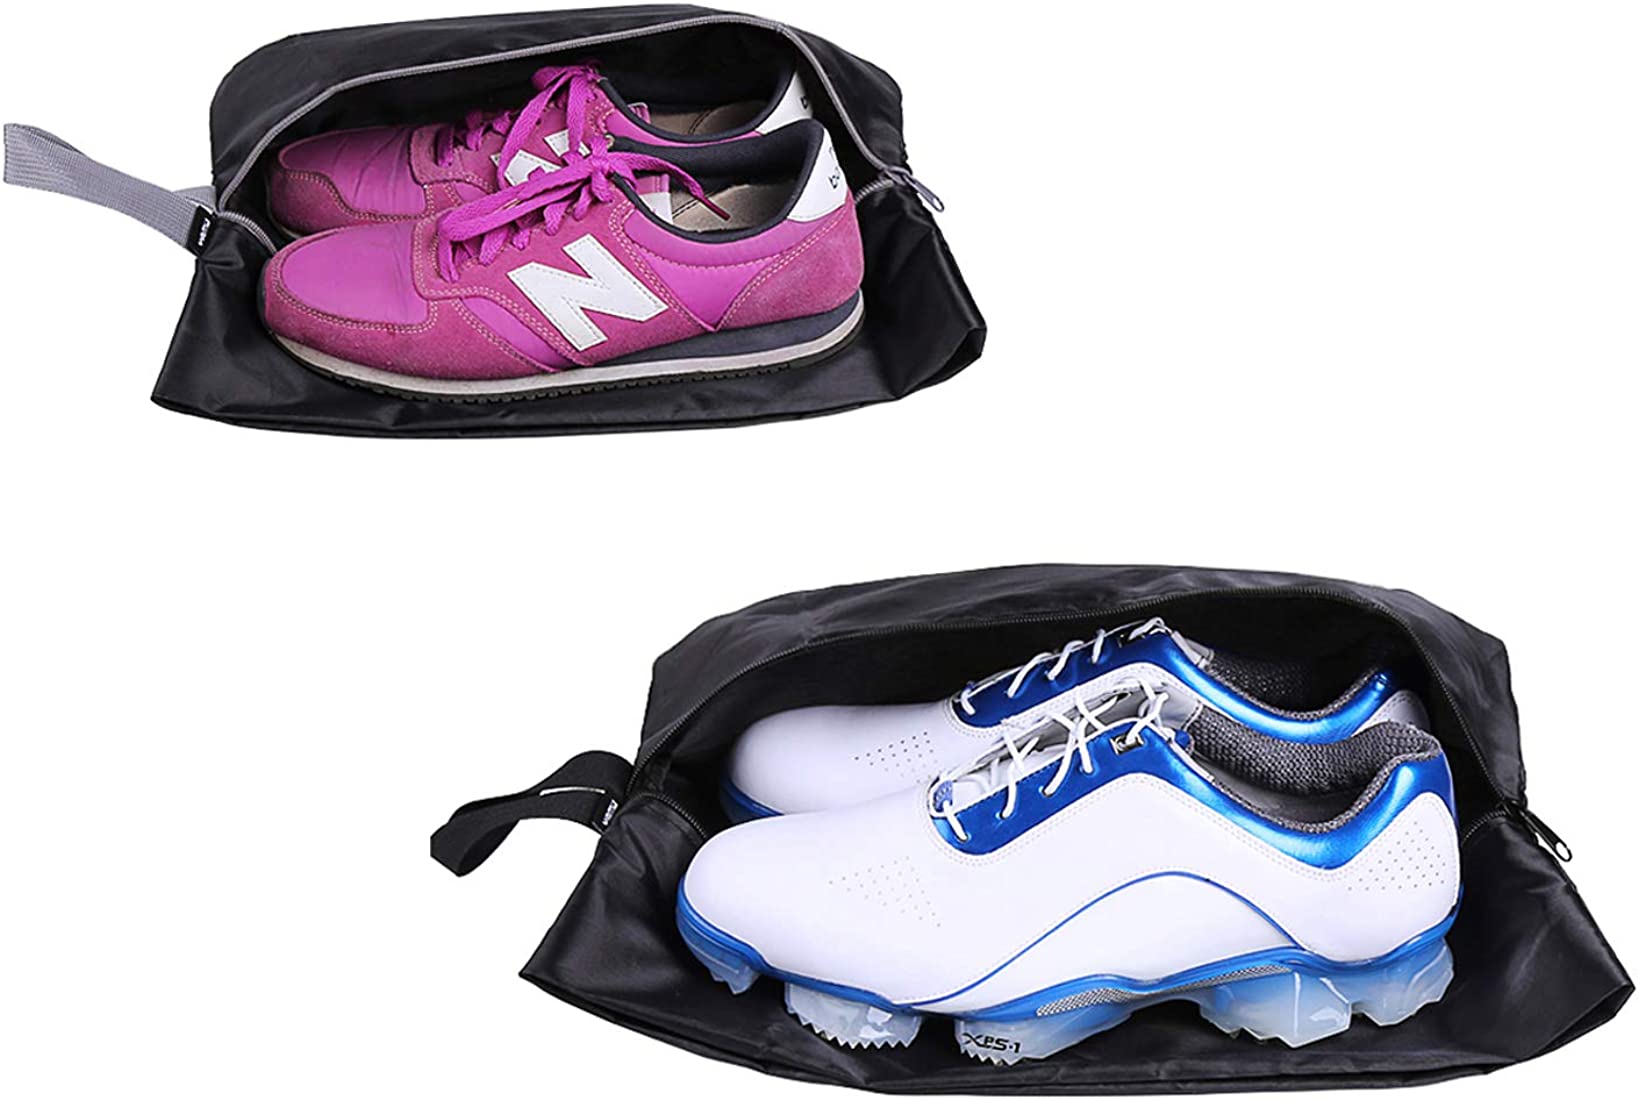 Amazon.com: YAMIU Travel Shoe Bags Set of 2 Waterproof Nylon with